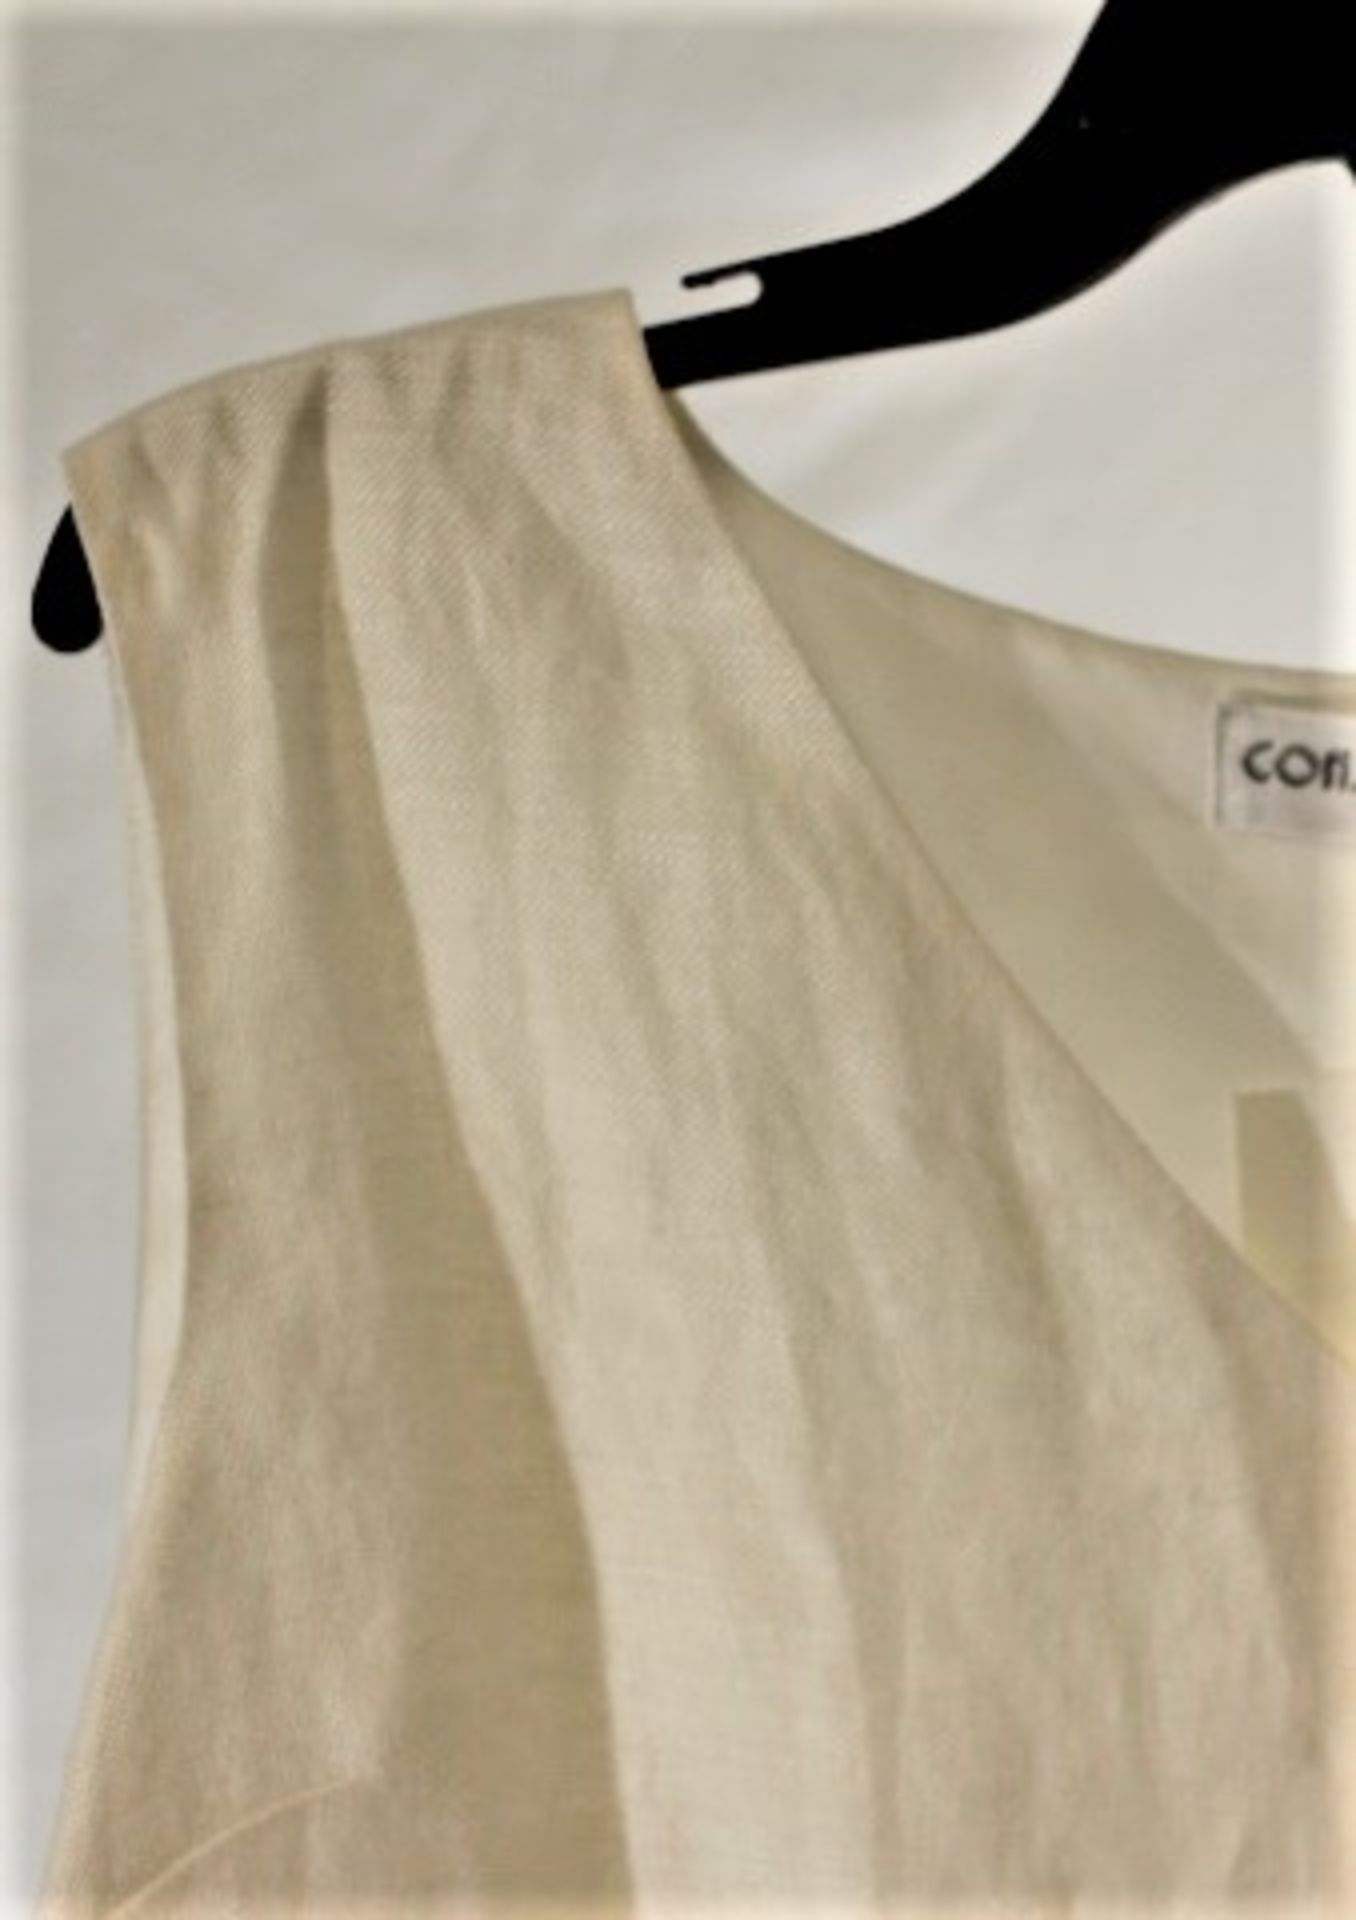 1 x Constantin Paris White Top - Size: 24 - Material: Acetate, Acrylic, Cotton, Fibre, Polyester, - Image 6 of 8